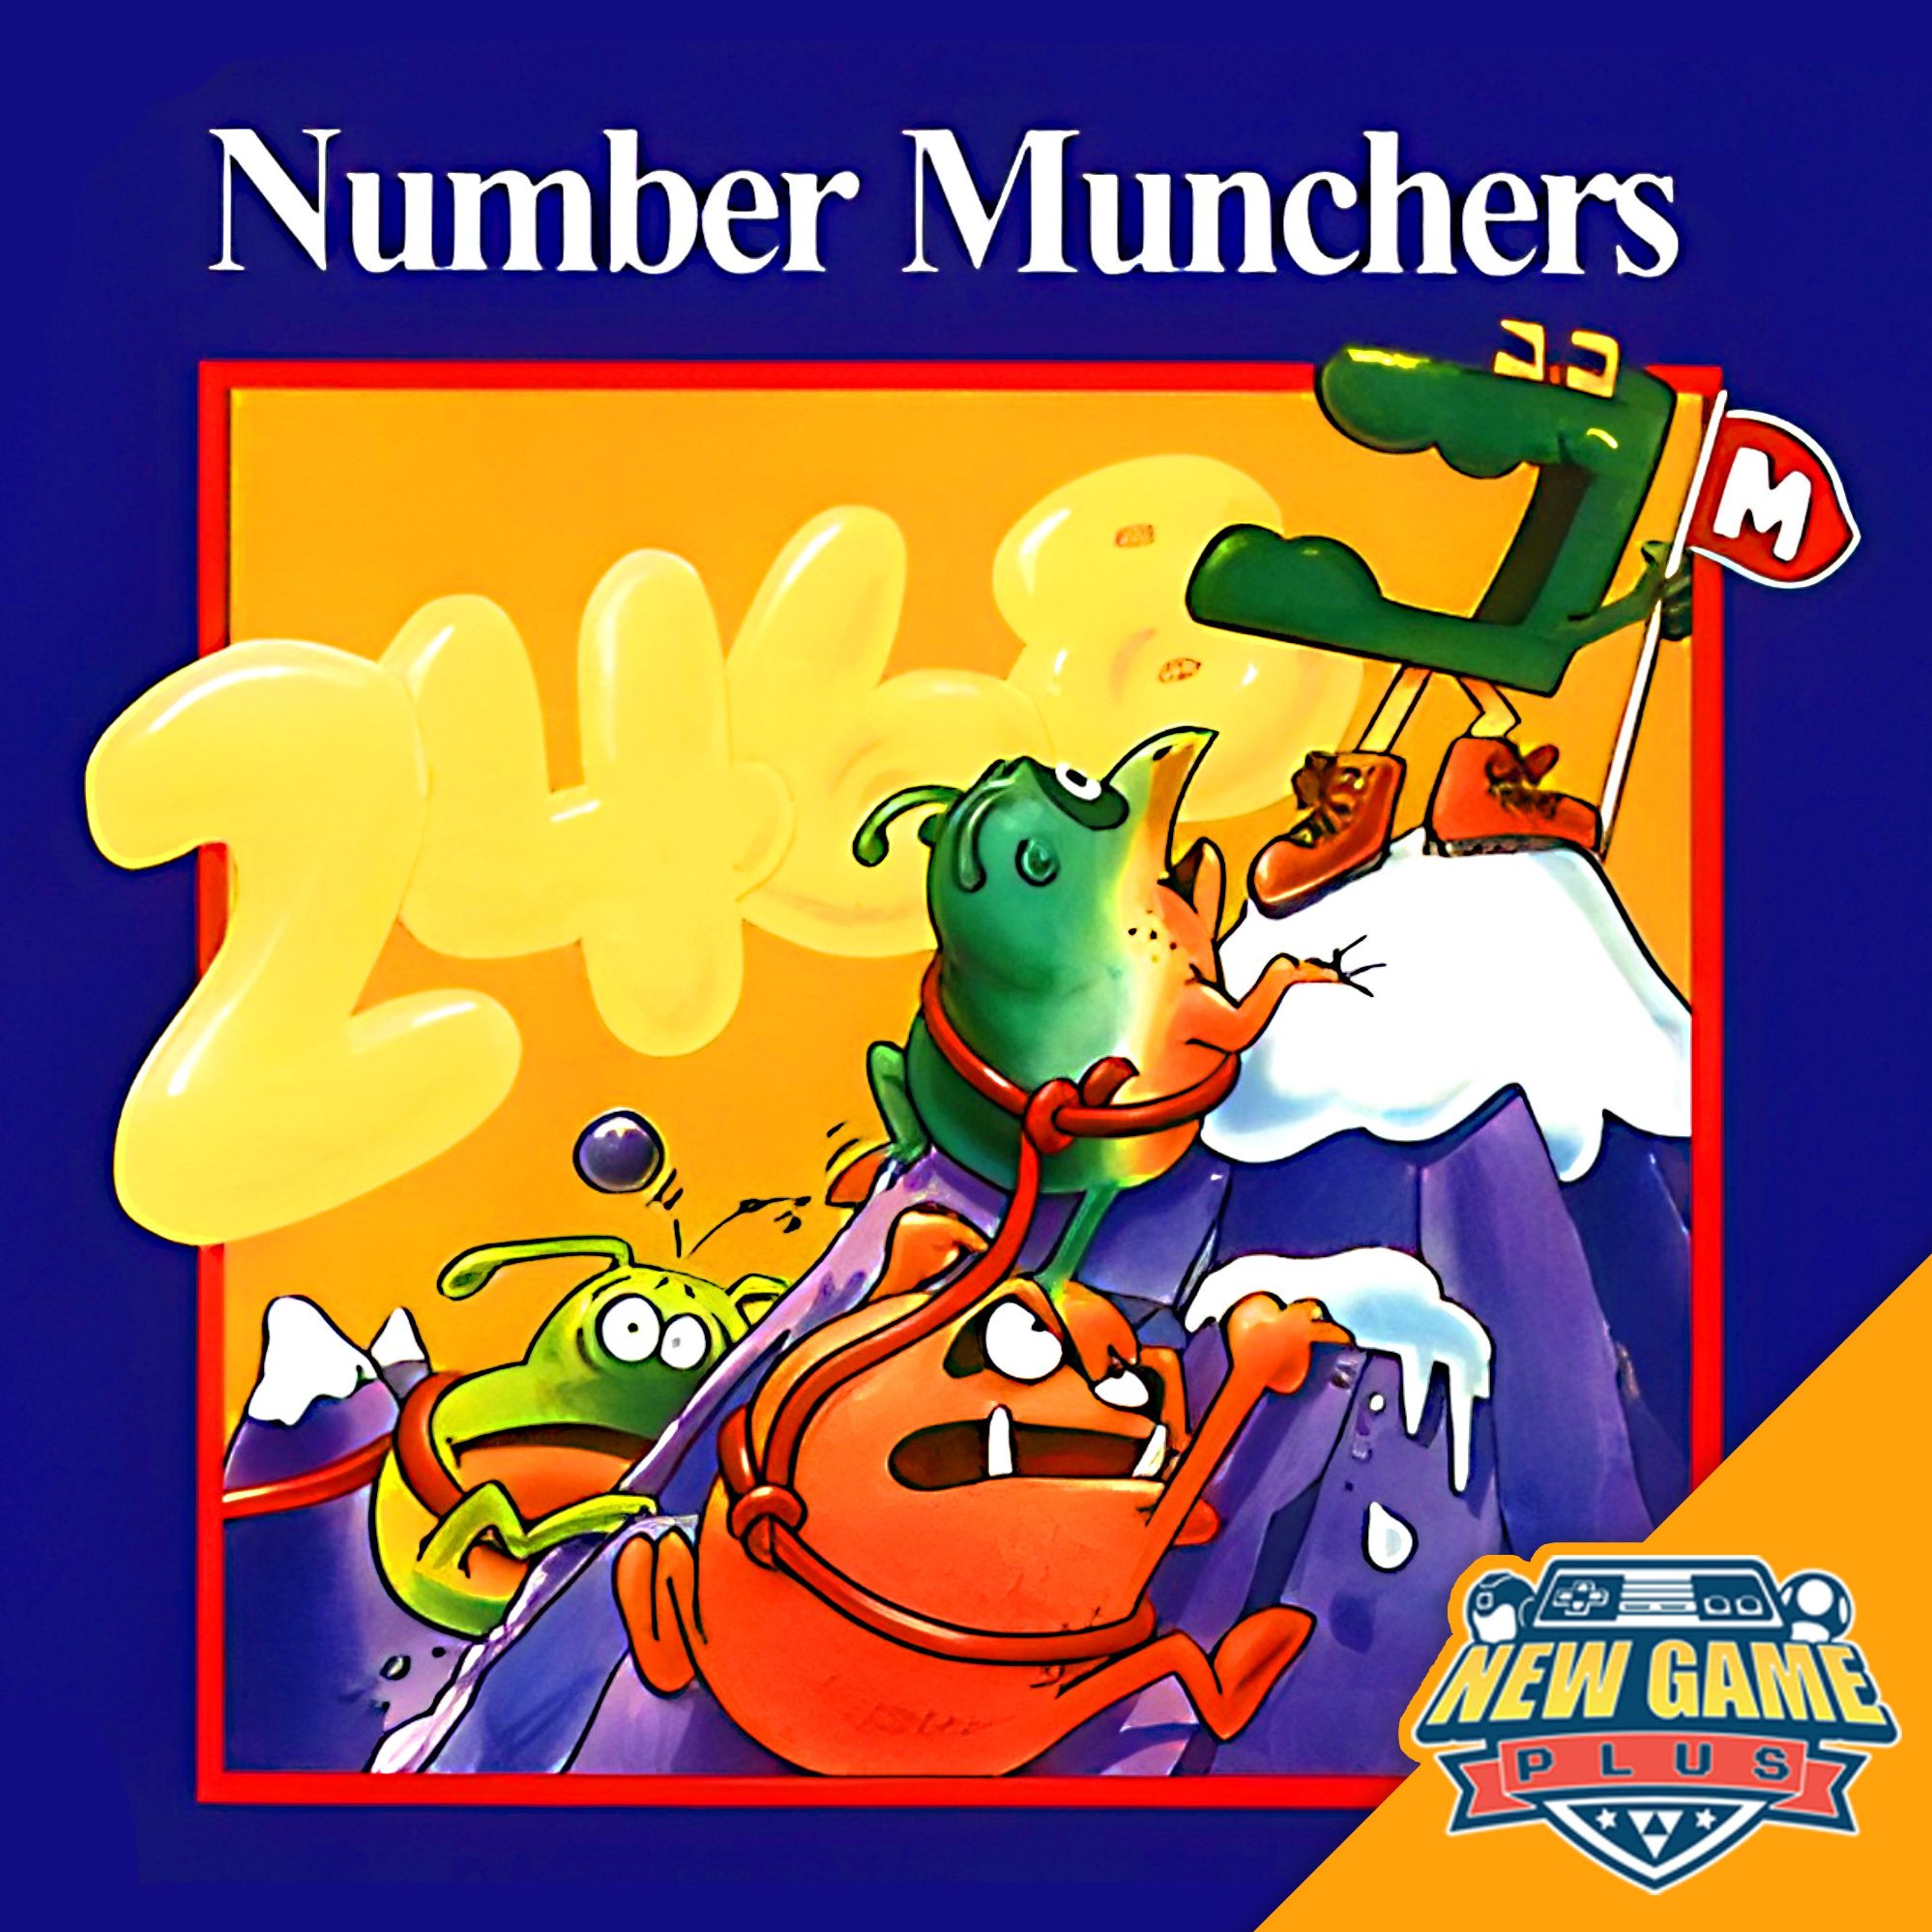 Episode 428: Number Munchers